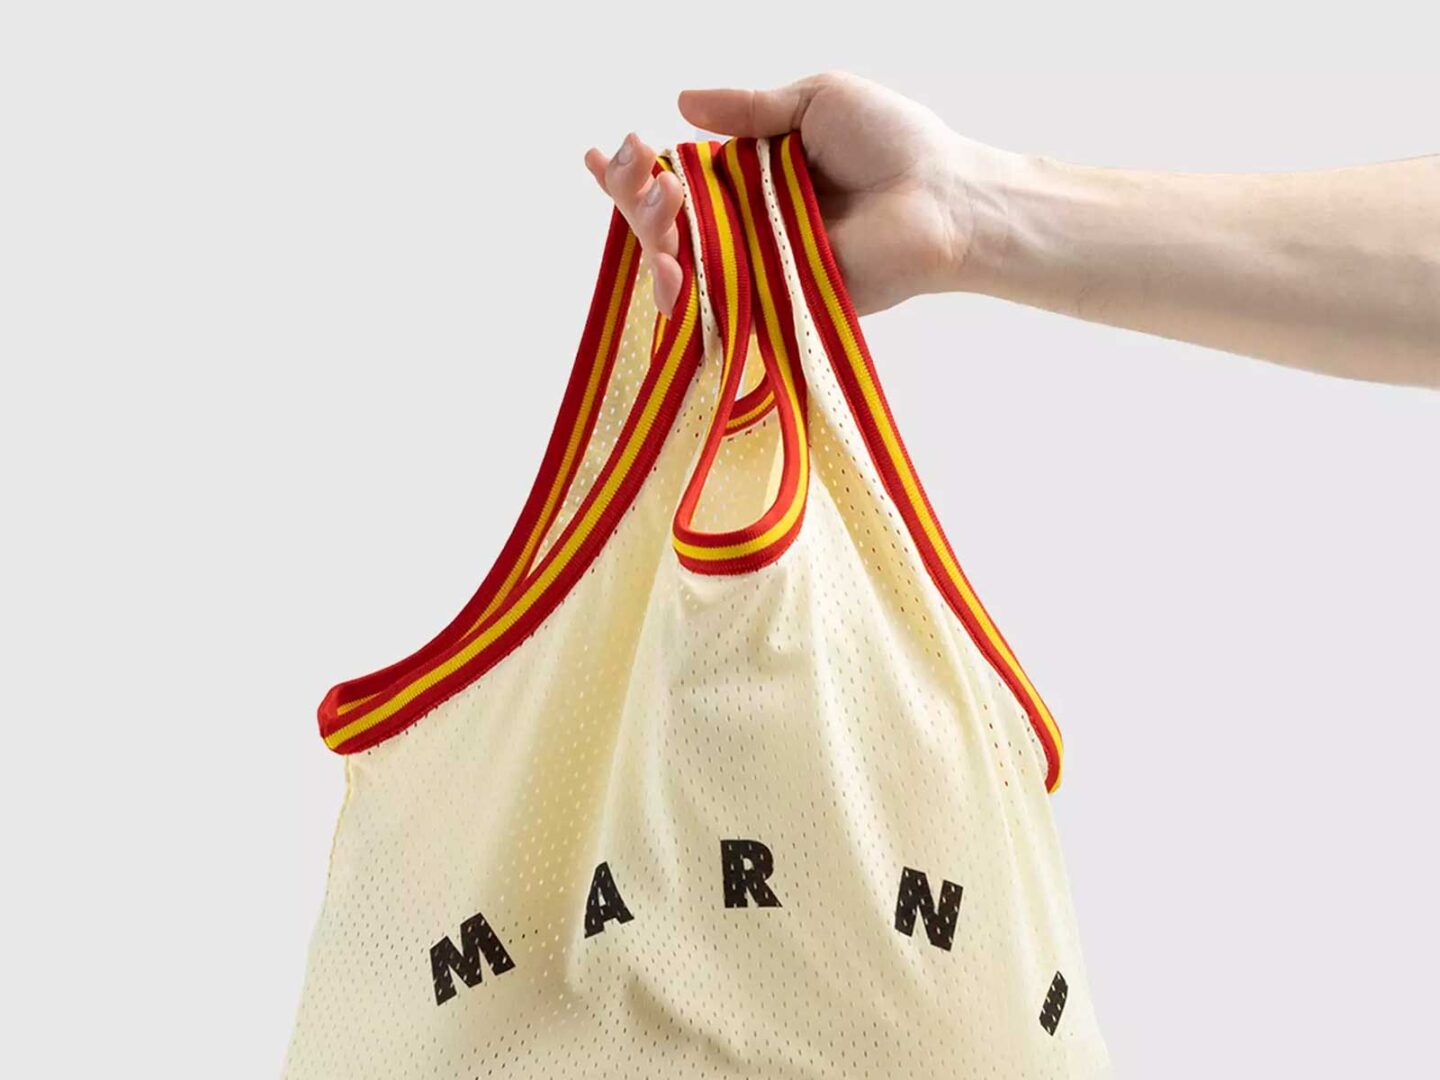 Marni’s new item: basketball jersey or handbag?